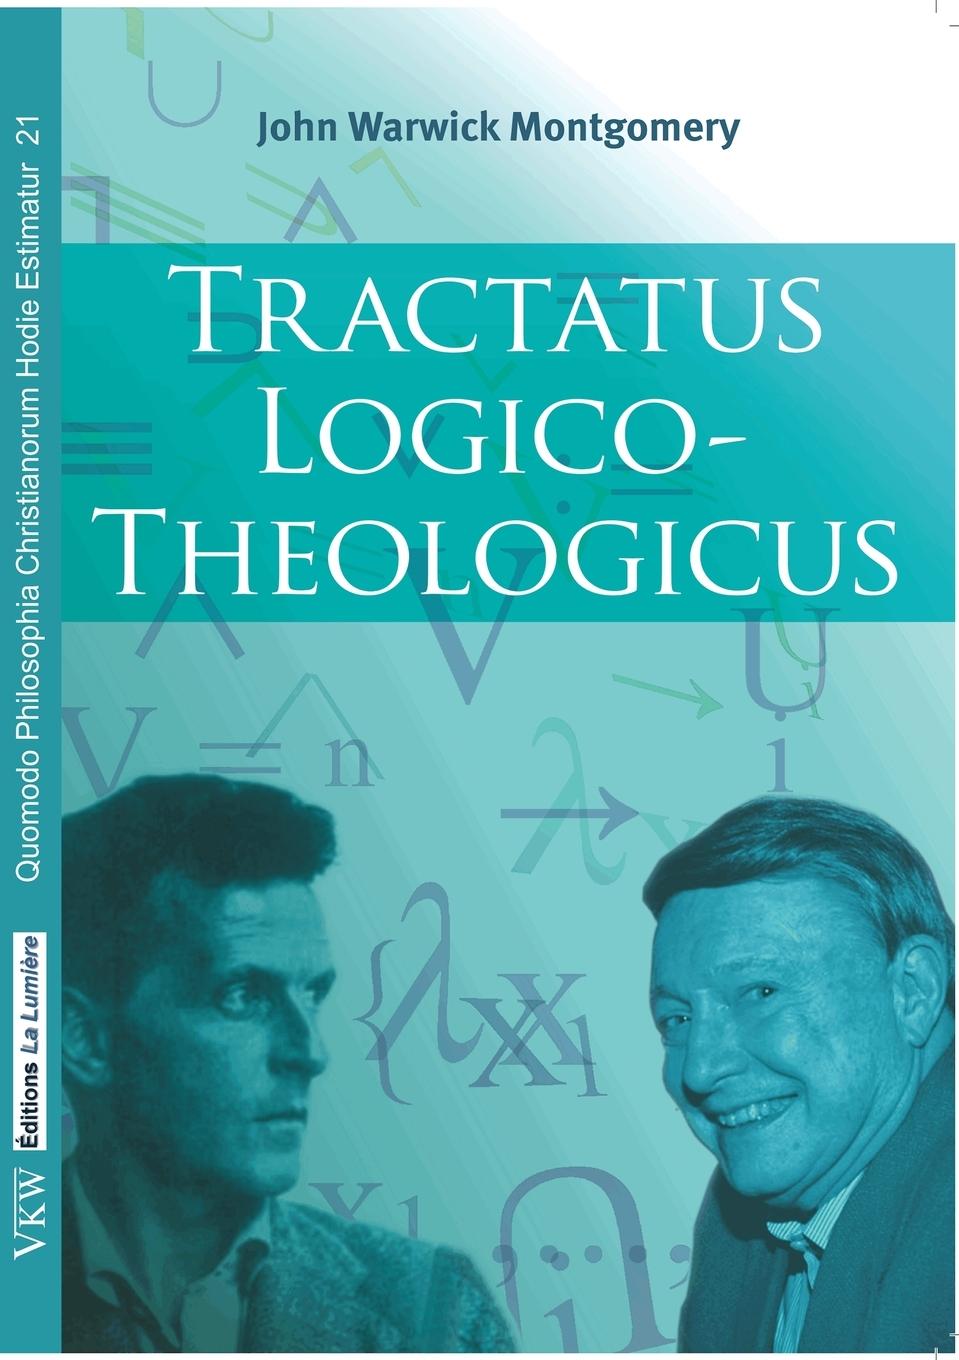 Tractatus Logico-Theologicus - Montgomery, John Warwick